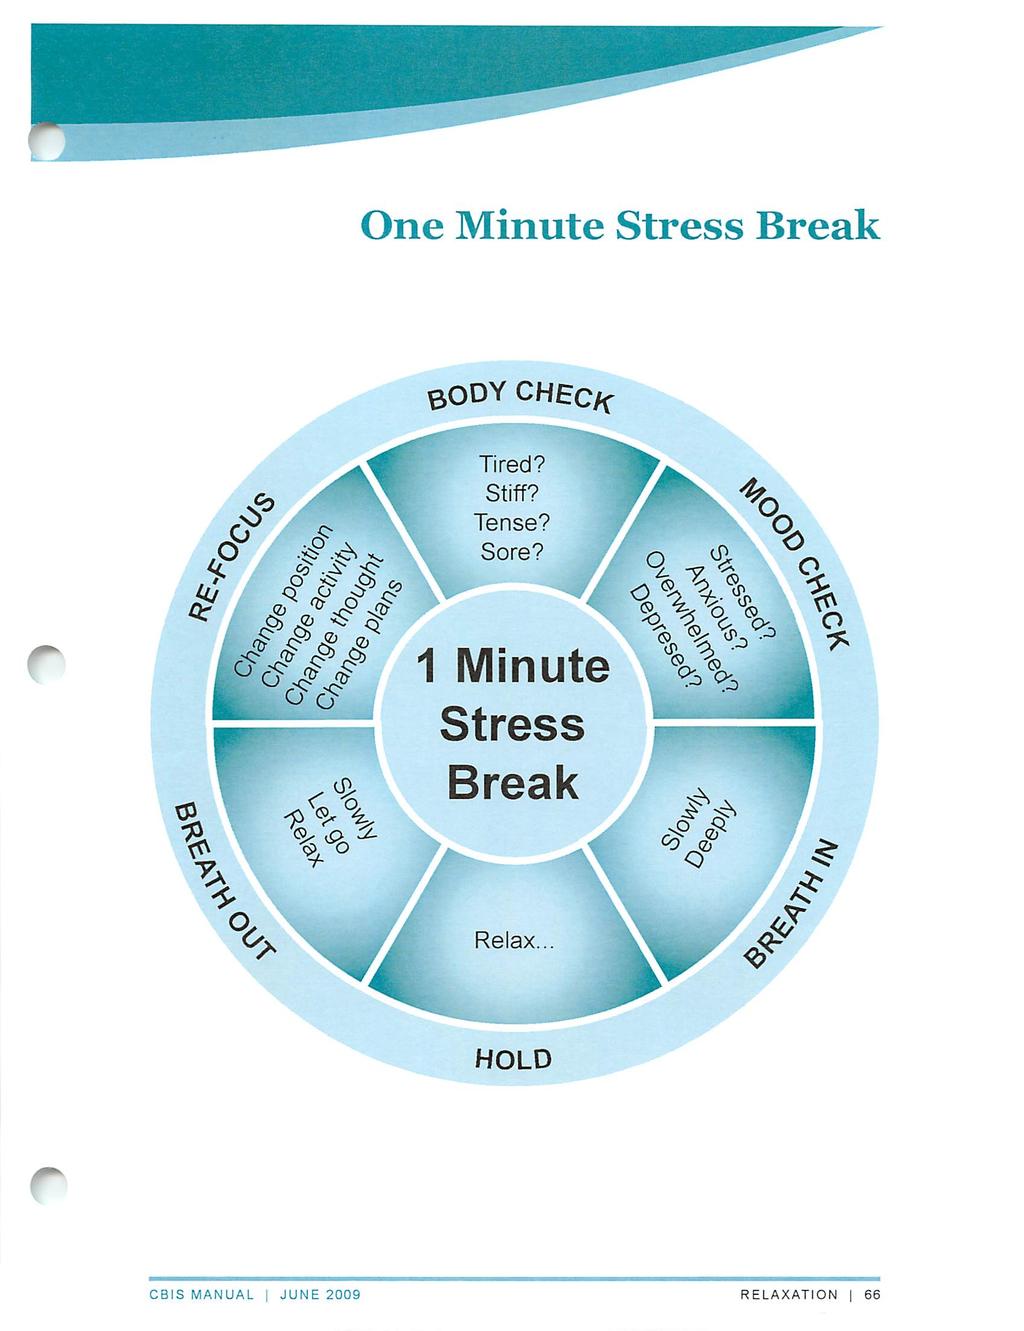 One Minute Stress Break BODY CHEcac /3r > > so) <y Q > ^ c* &> & ^ $ 1